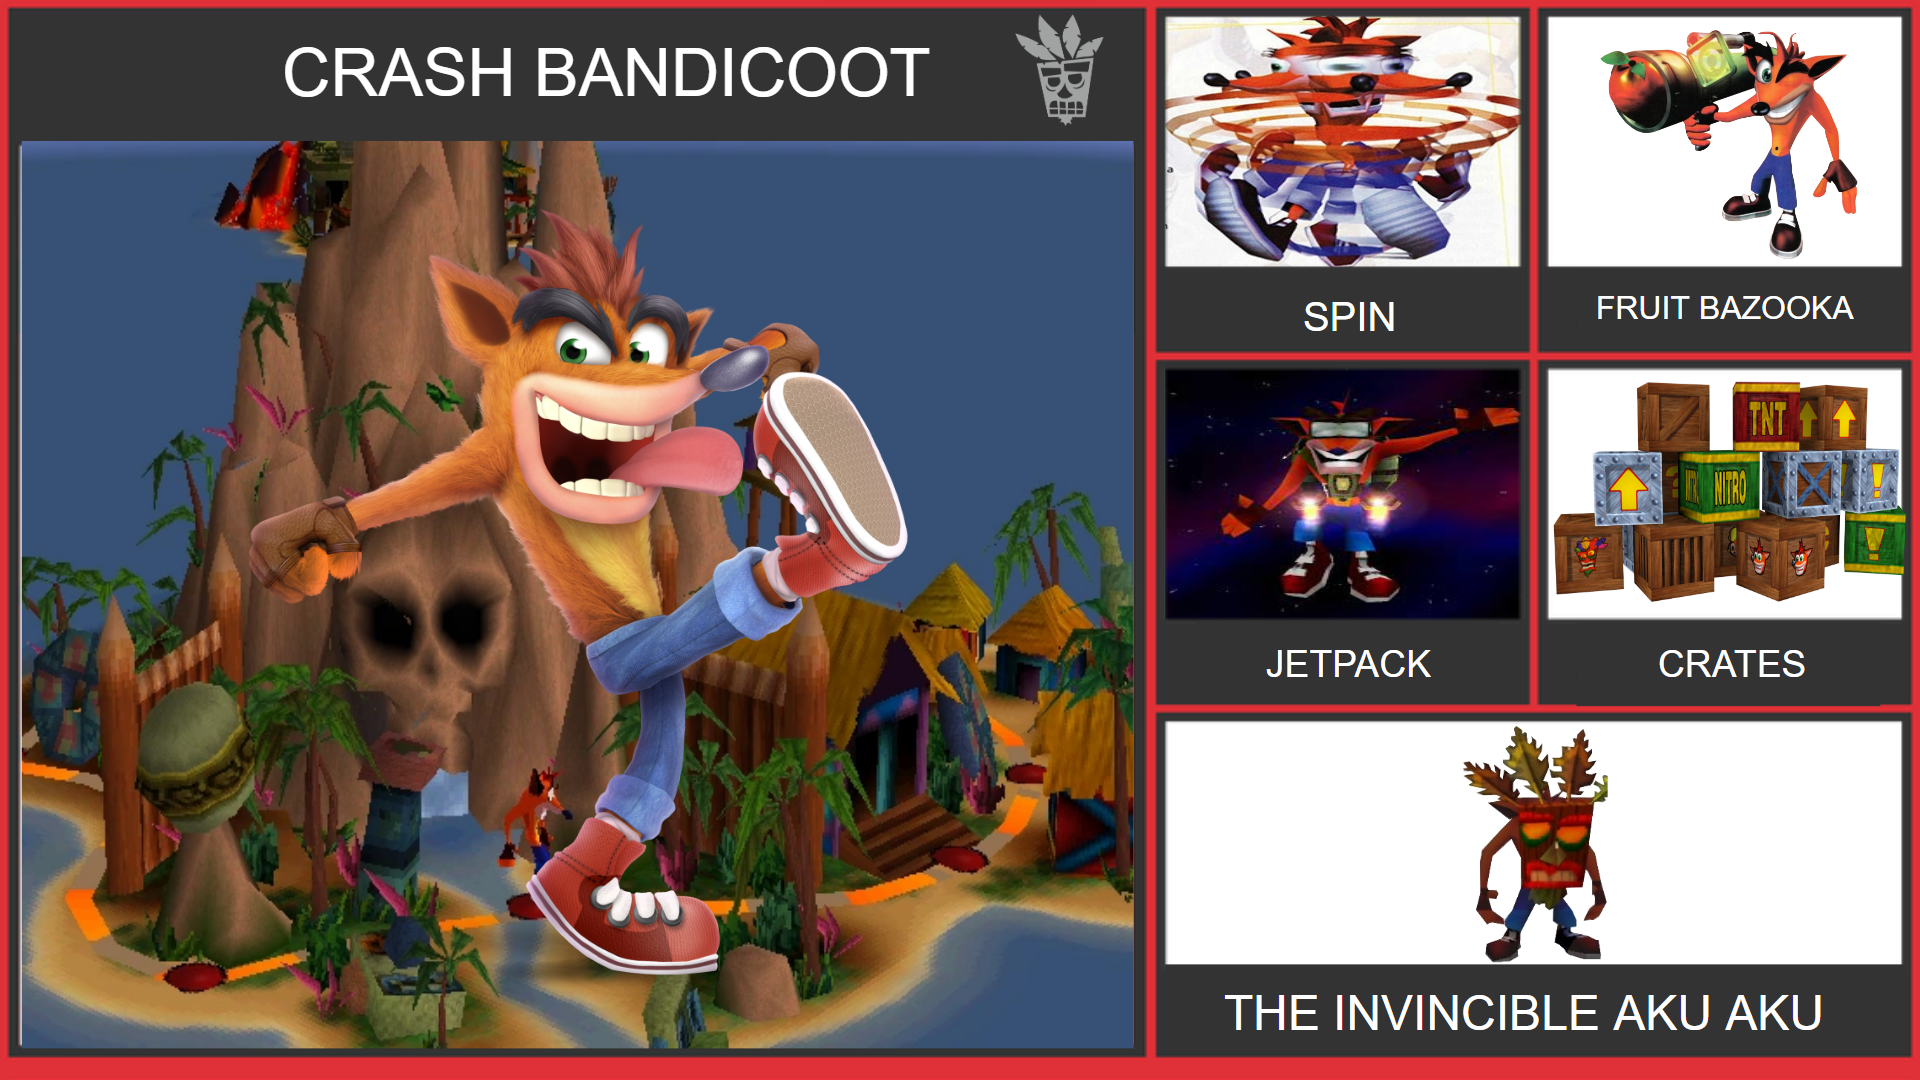 Crash Bandicoot Smash Bros Moveset (Remastered) by